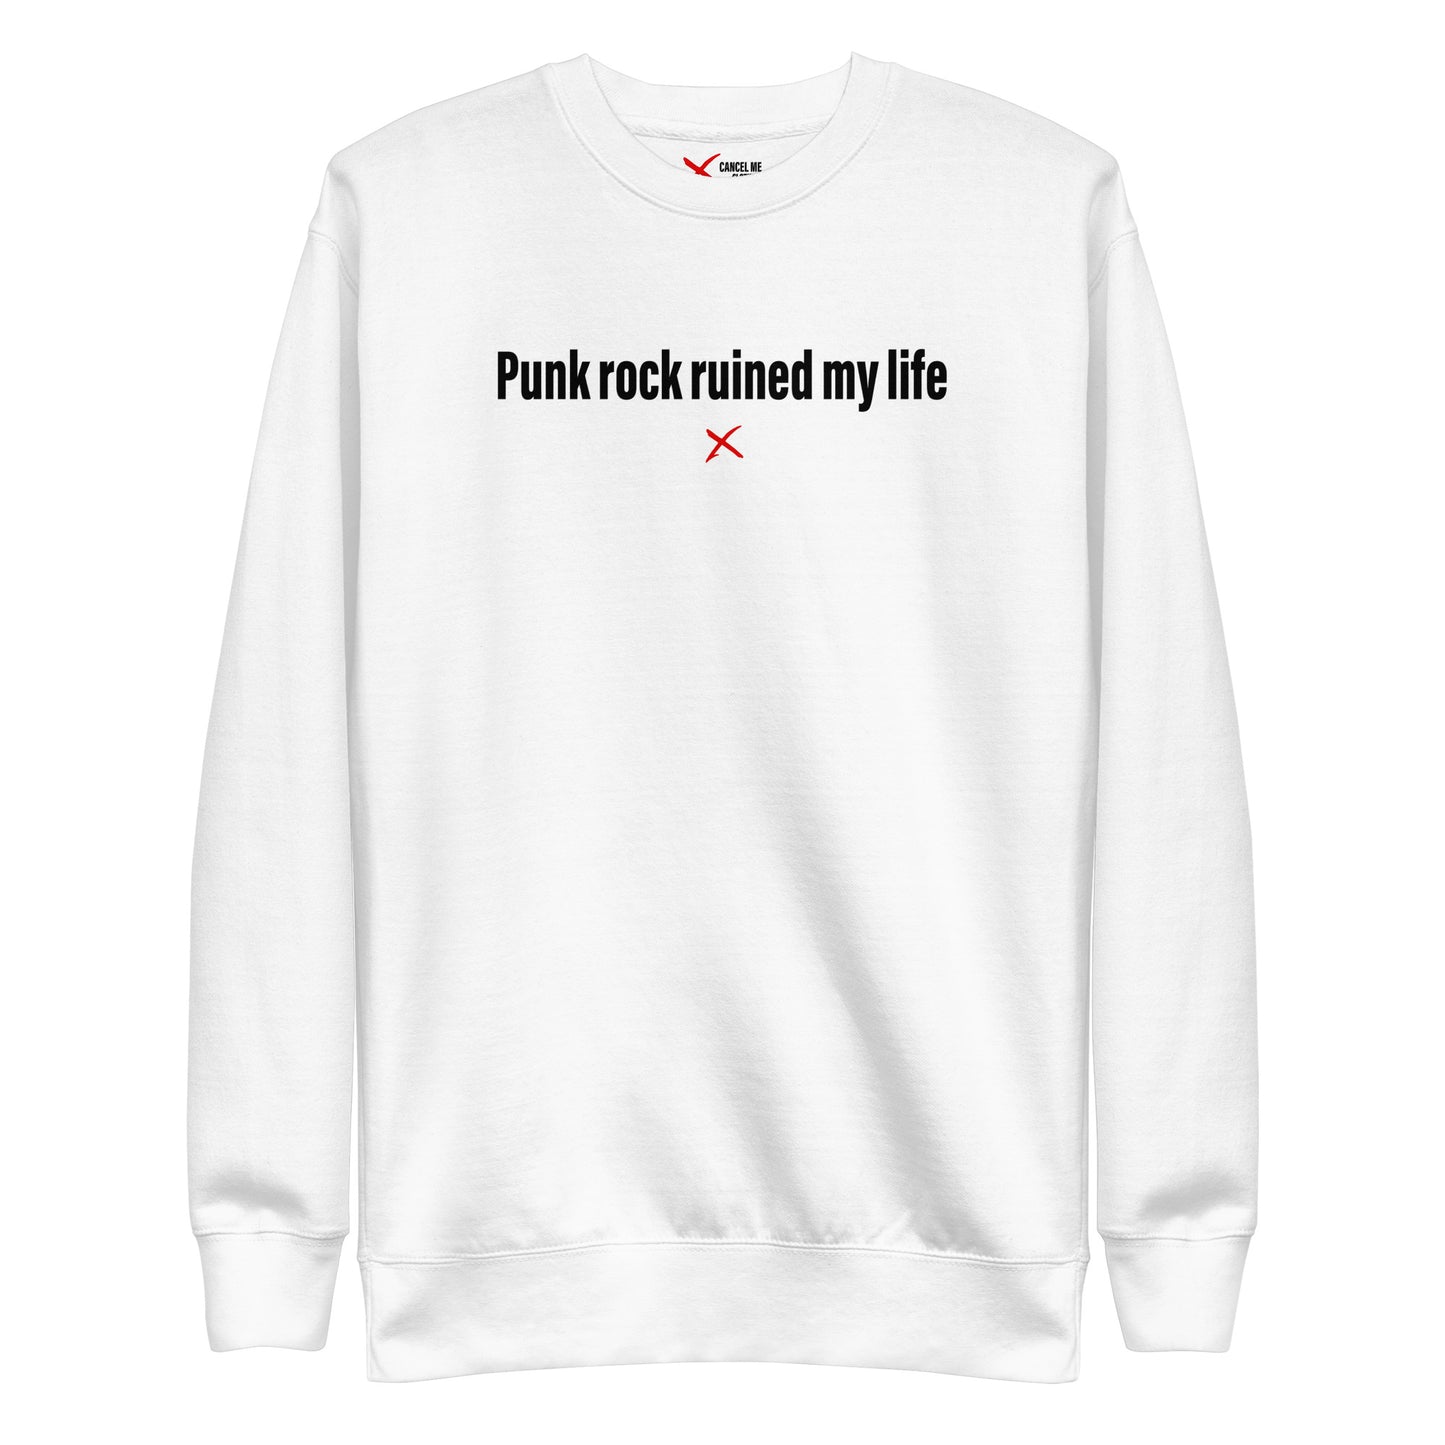 Punk rock ruined my life - Sweatshirt